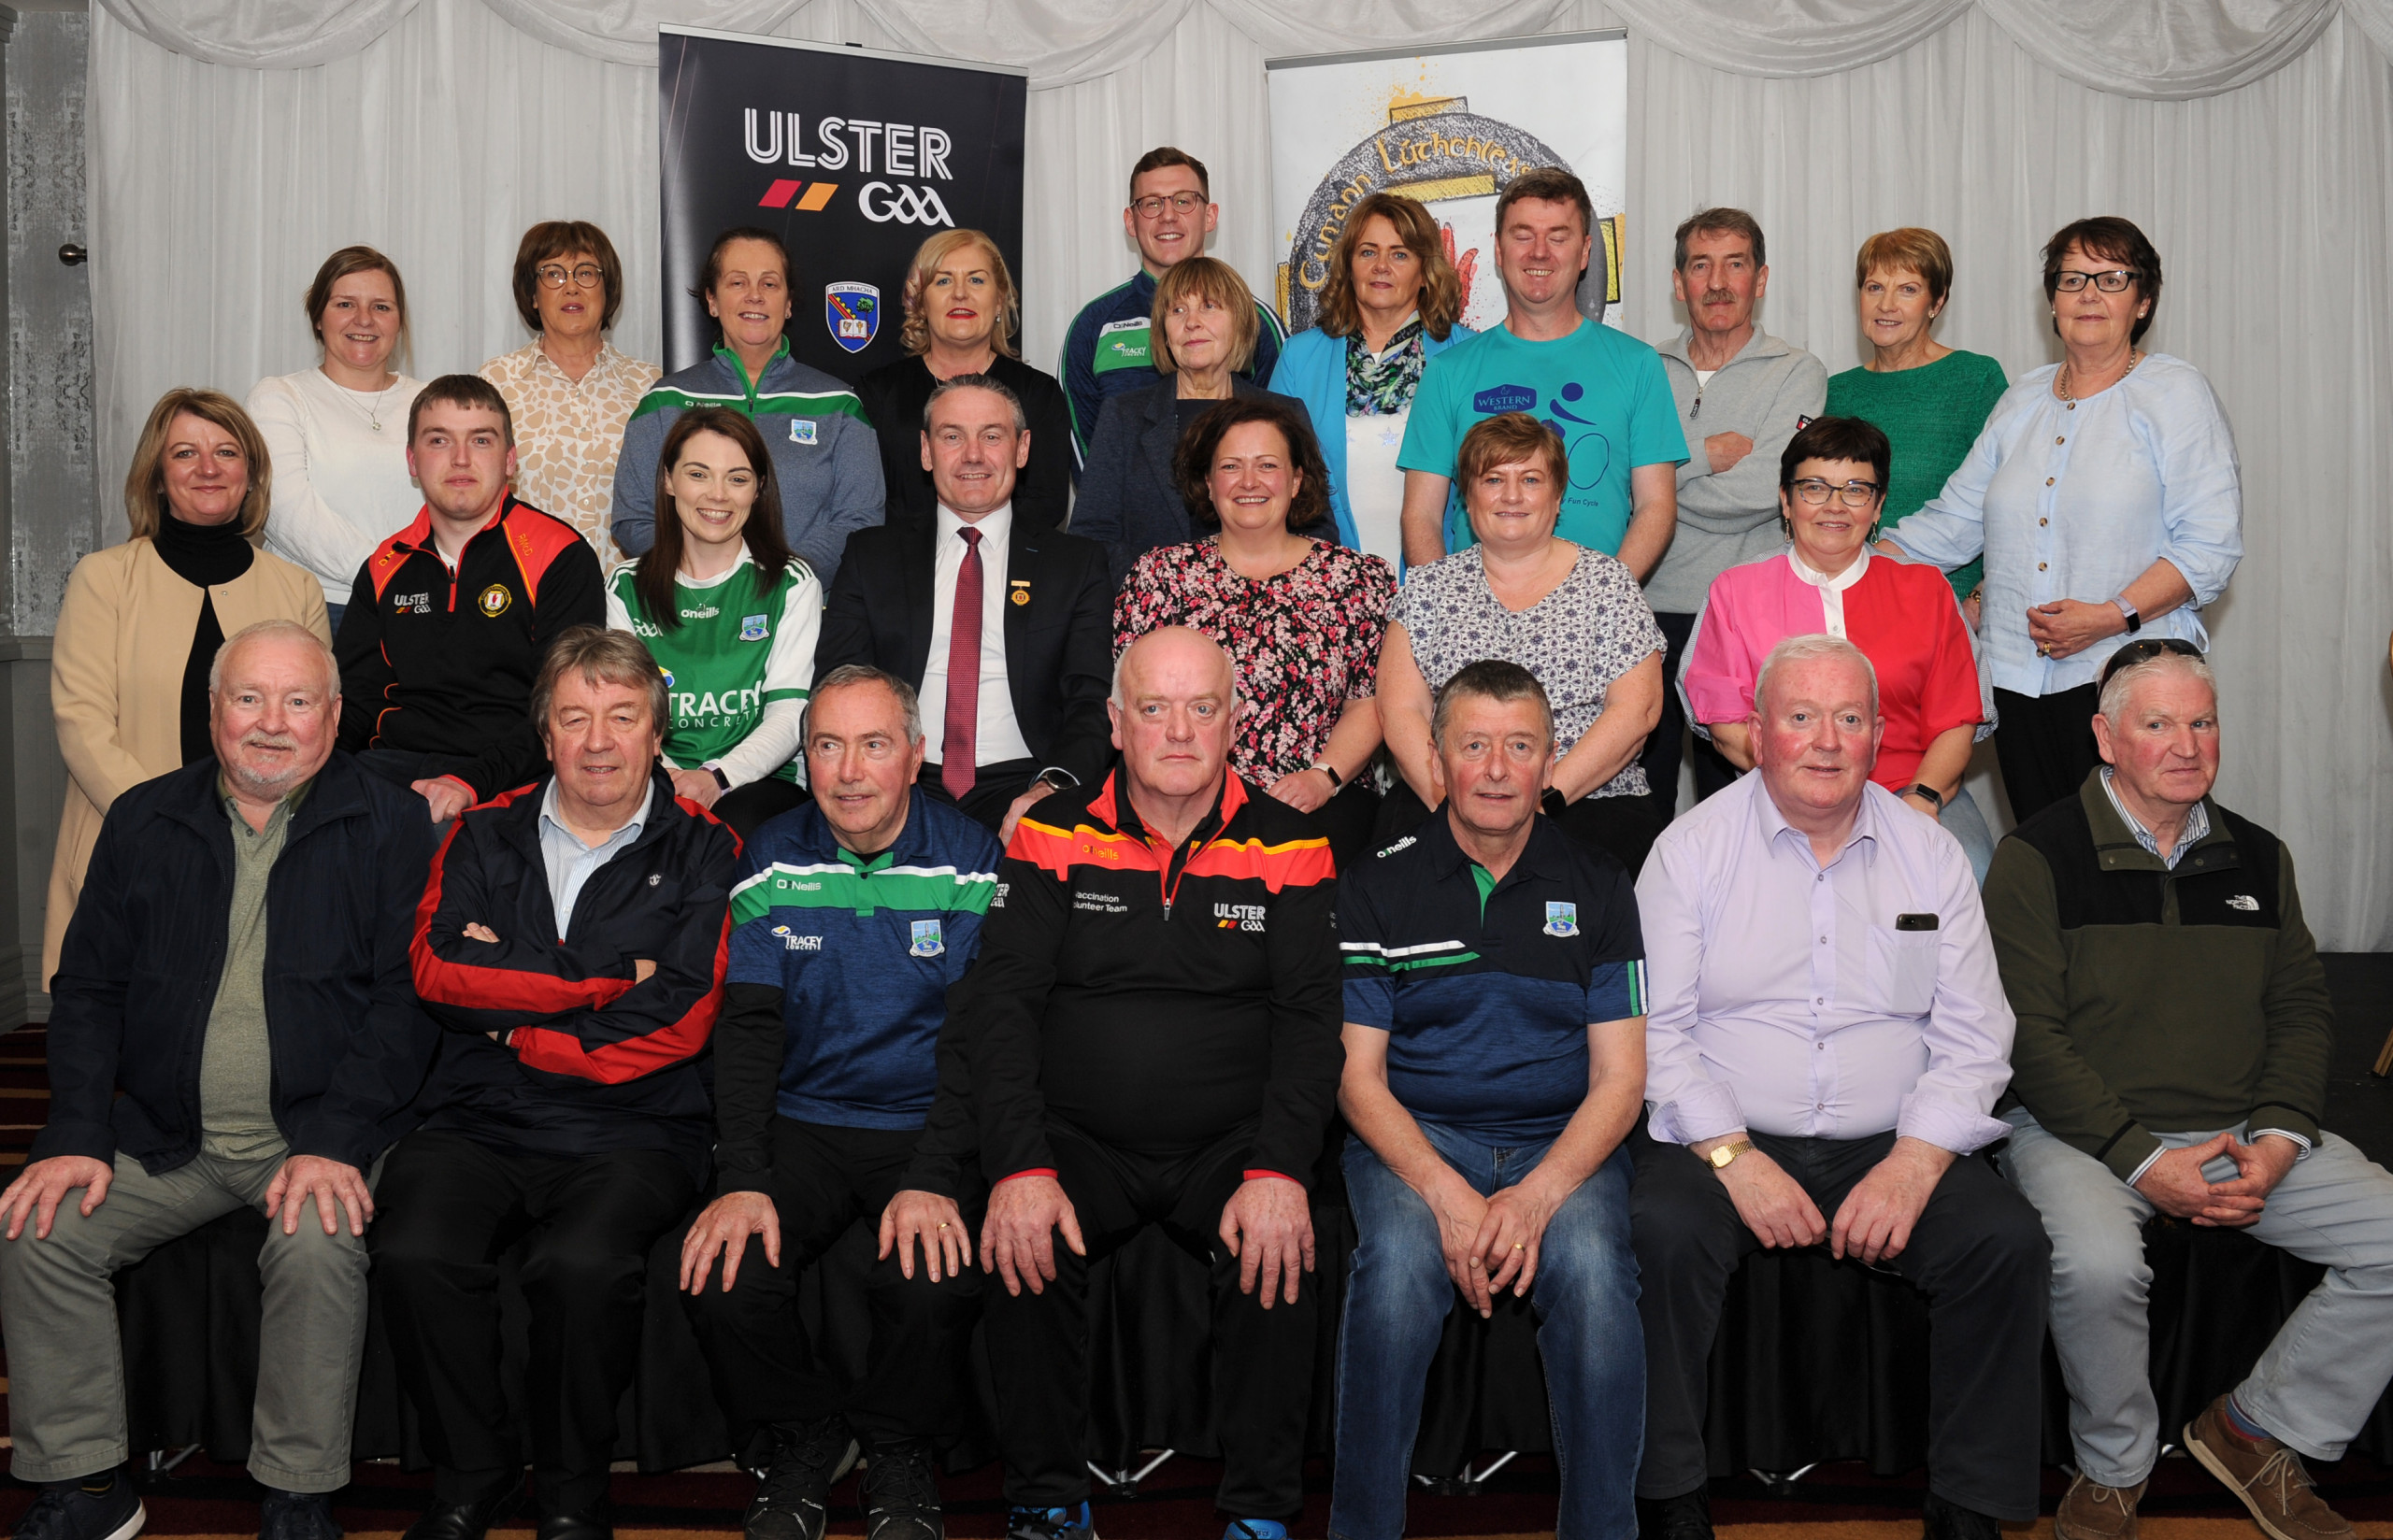 Ulster GAA Vaccination Volunteer Team celebrated